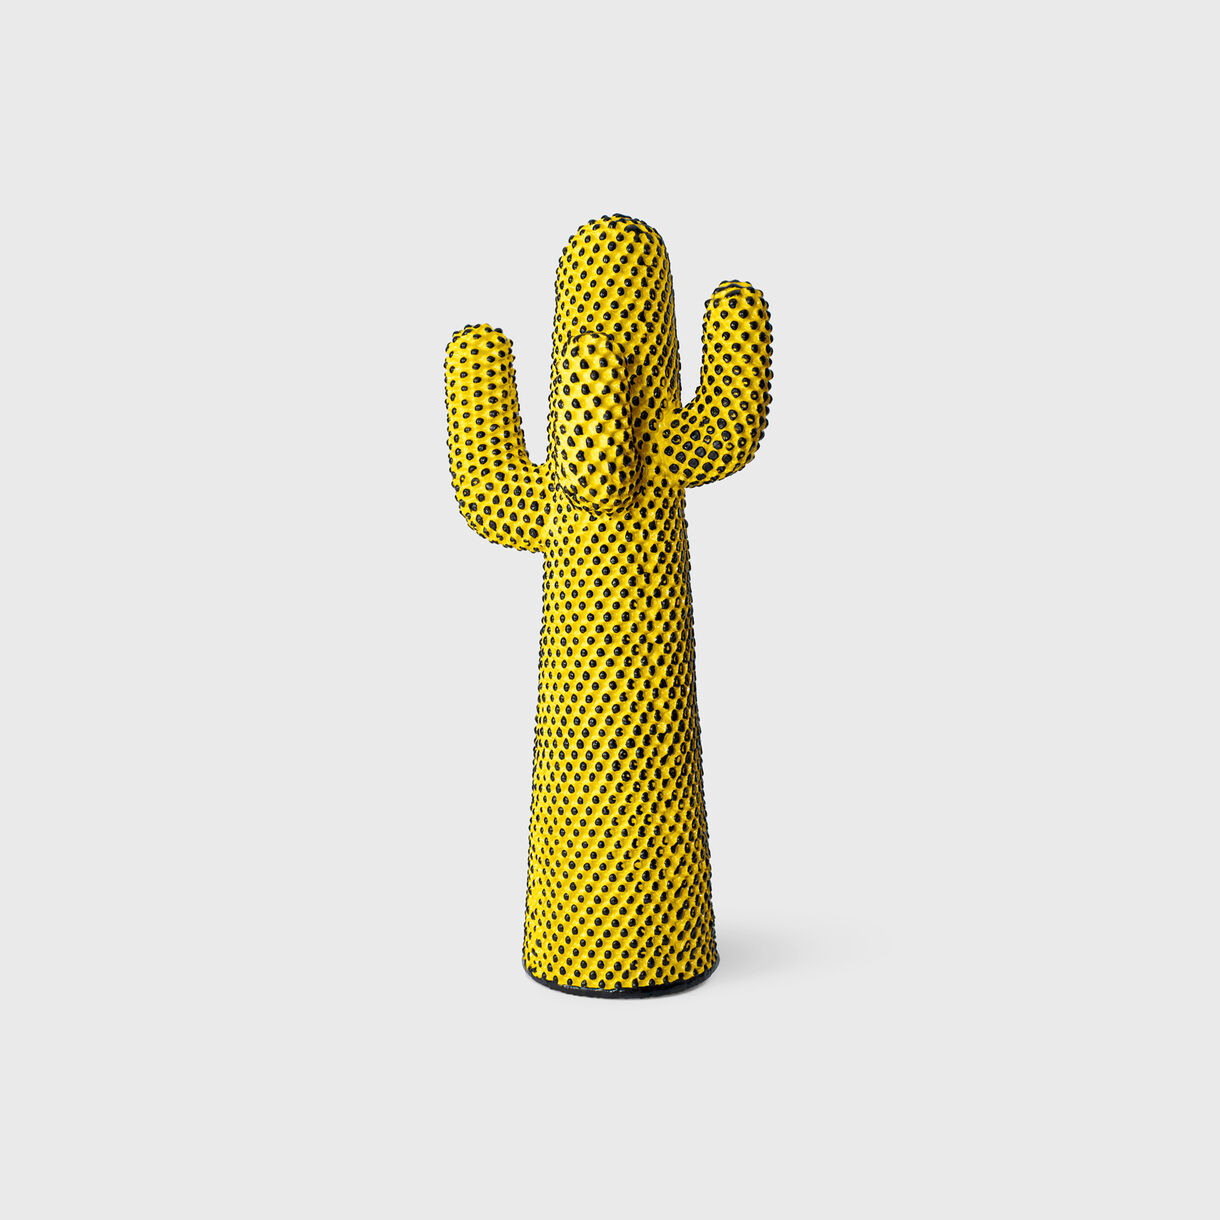 Andy's Cactus, Yellow